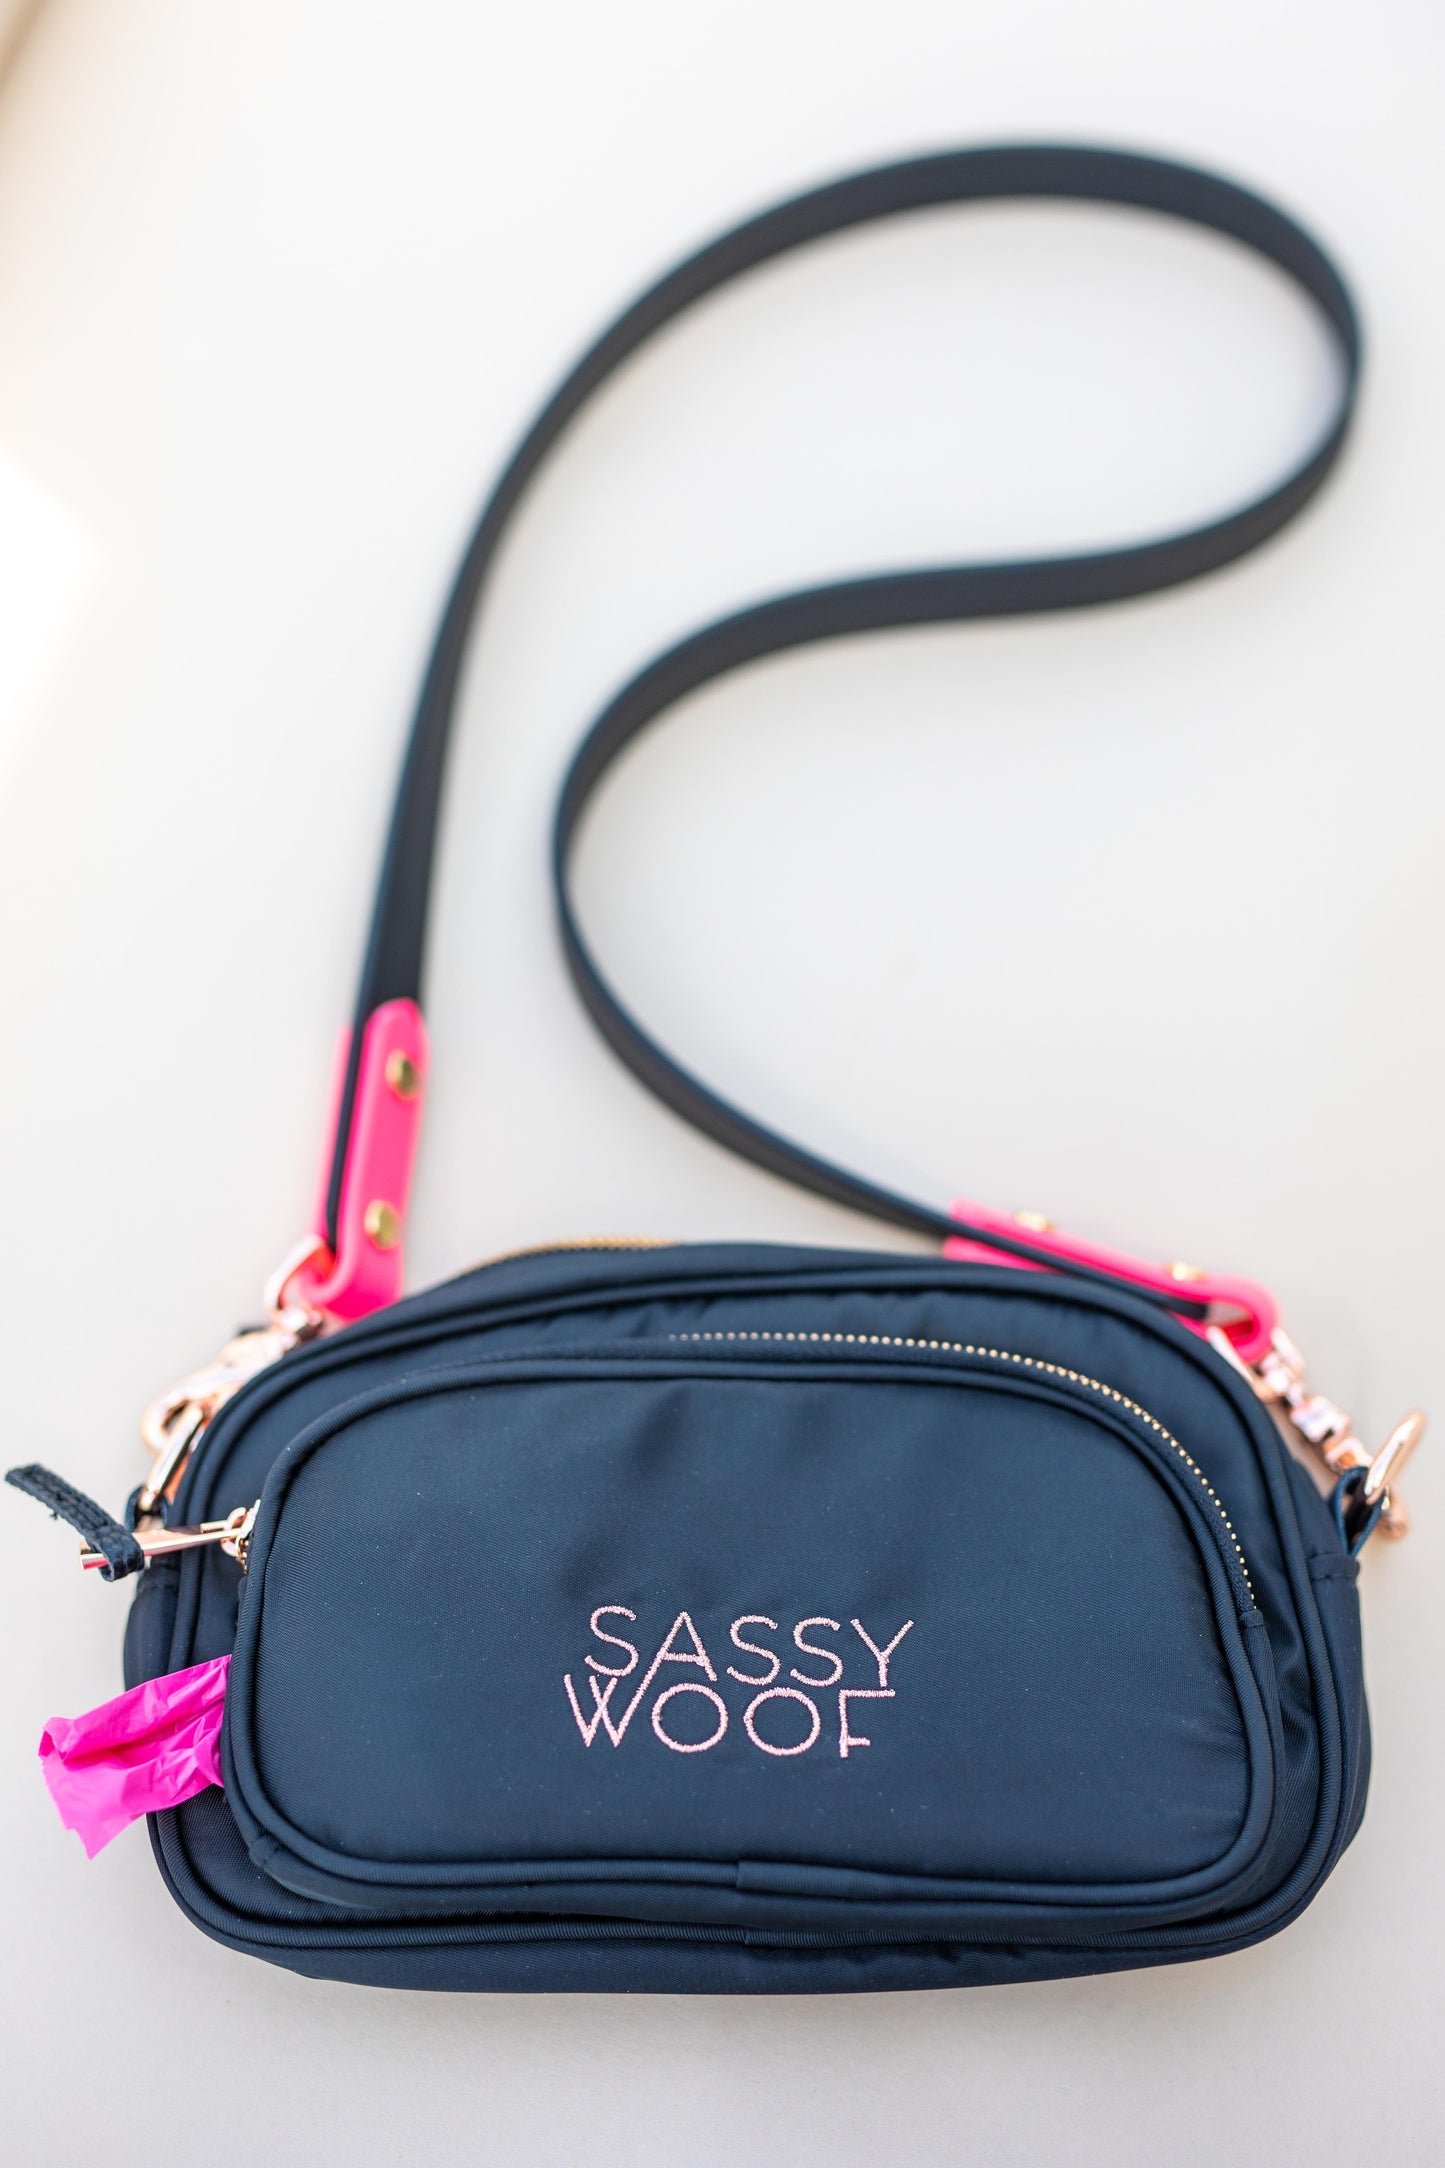 "Sassy Woof" Walk & Woof Crossbody Bags